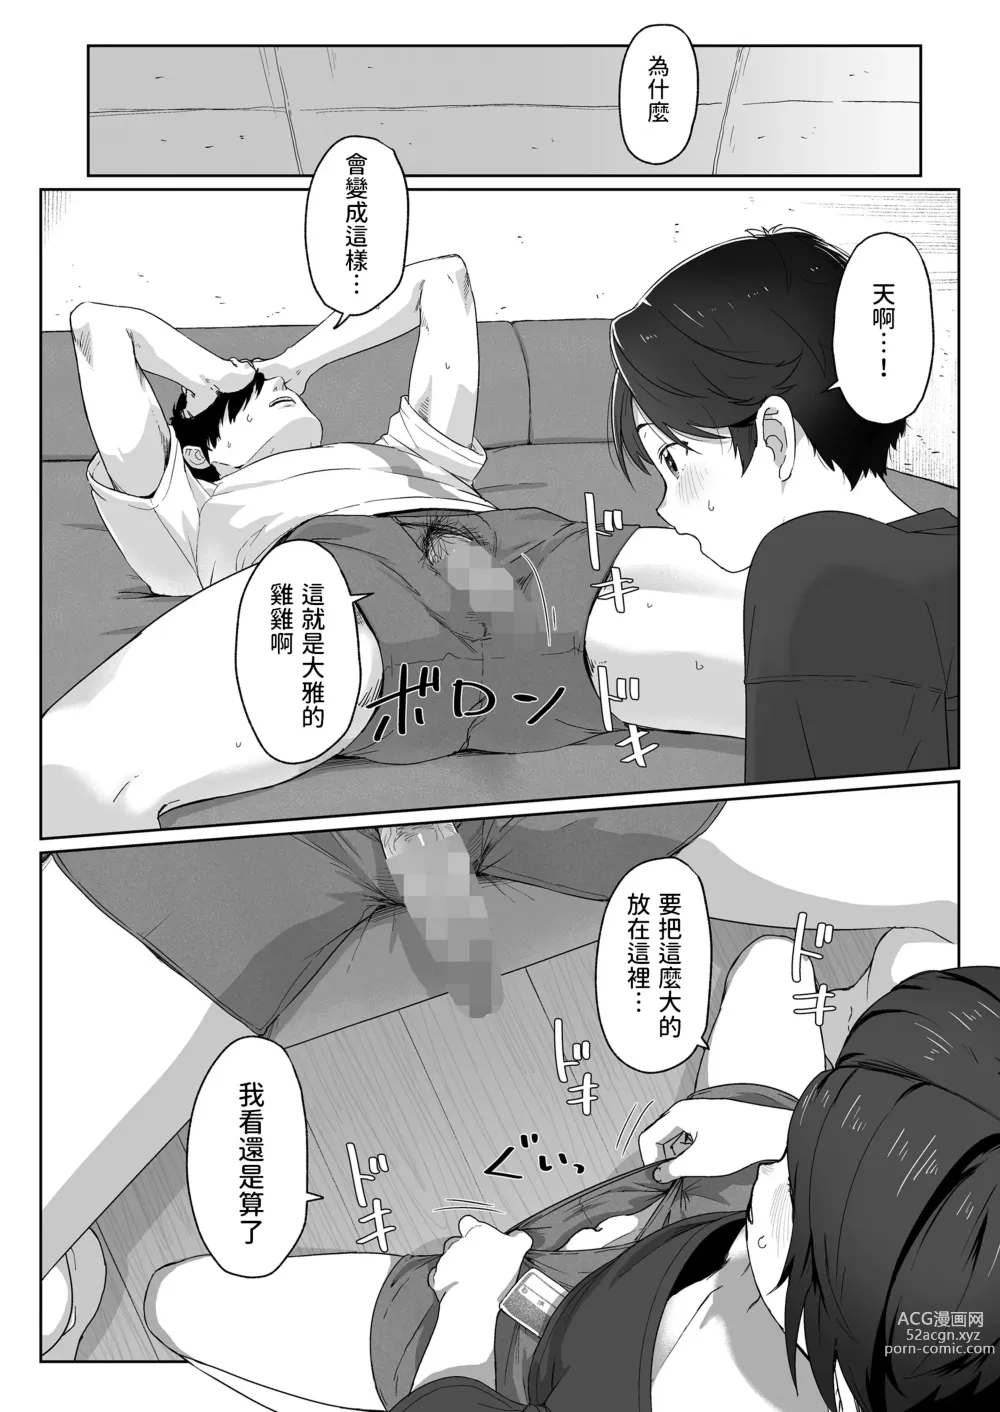 Page 12 of manga Ore ga Taberu kara